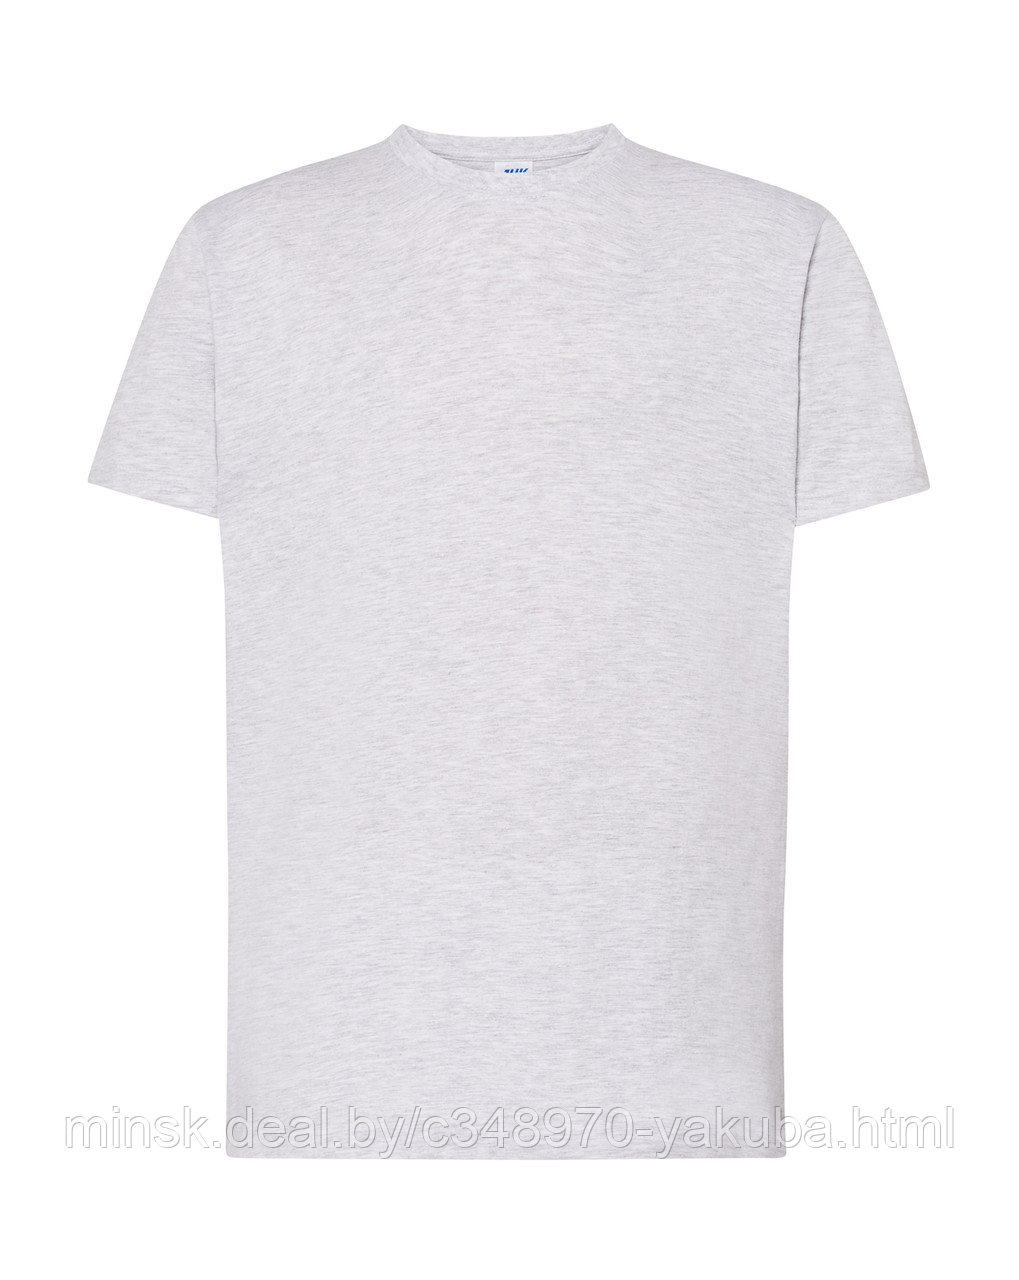 Майка серая (фуфайка, футболка) мужская, размер S-XXL REGULAR T-SHIRT MAN ASH MELANGE